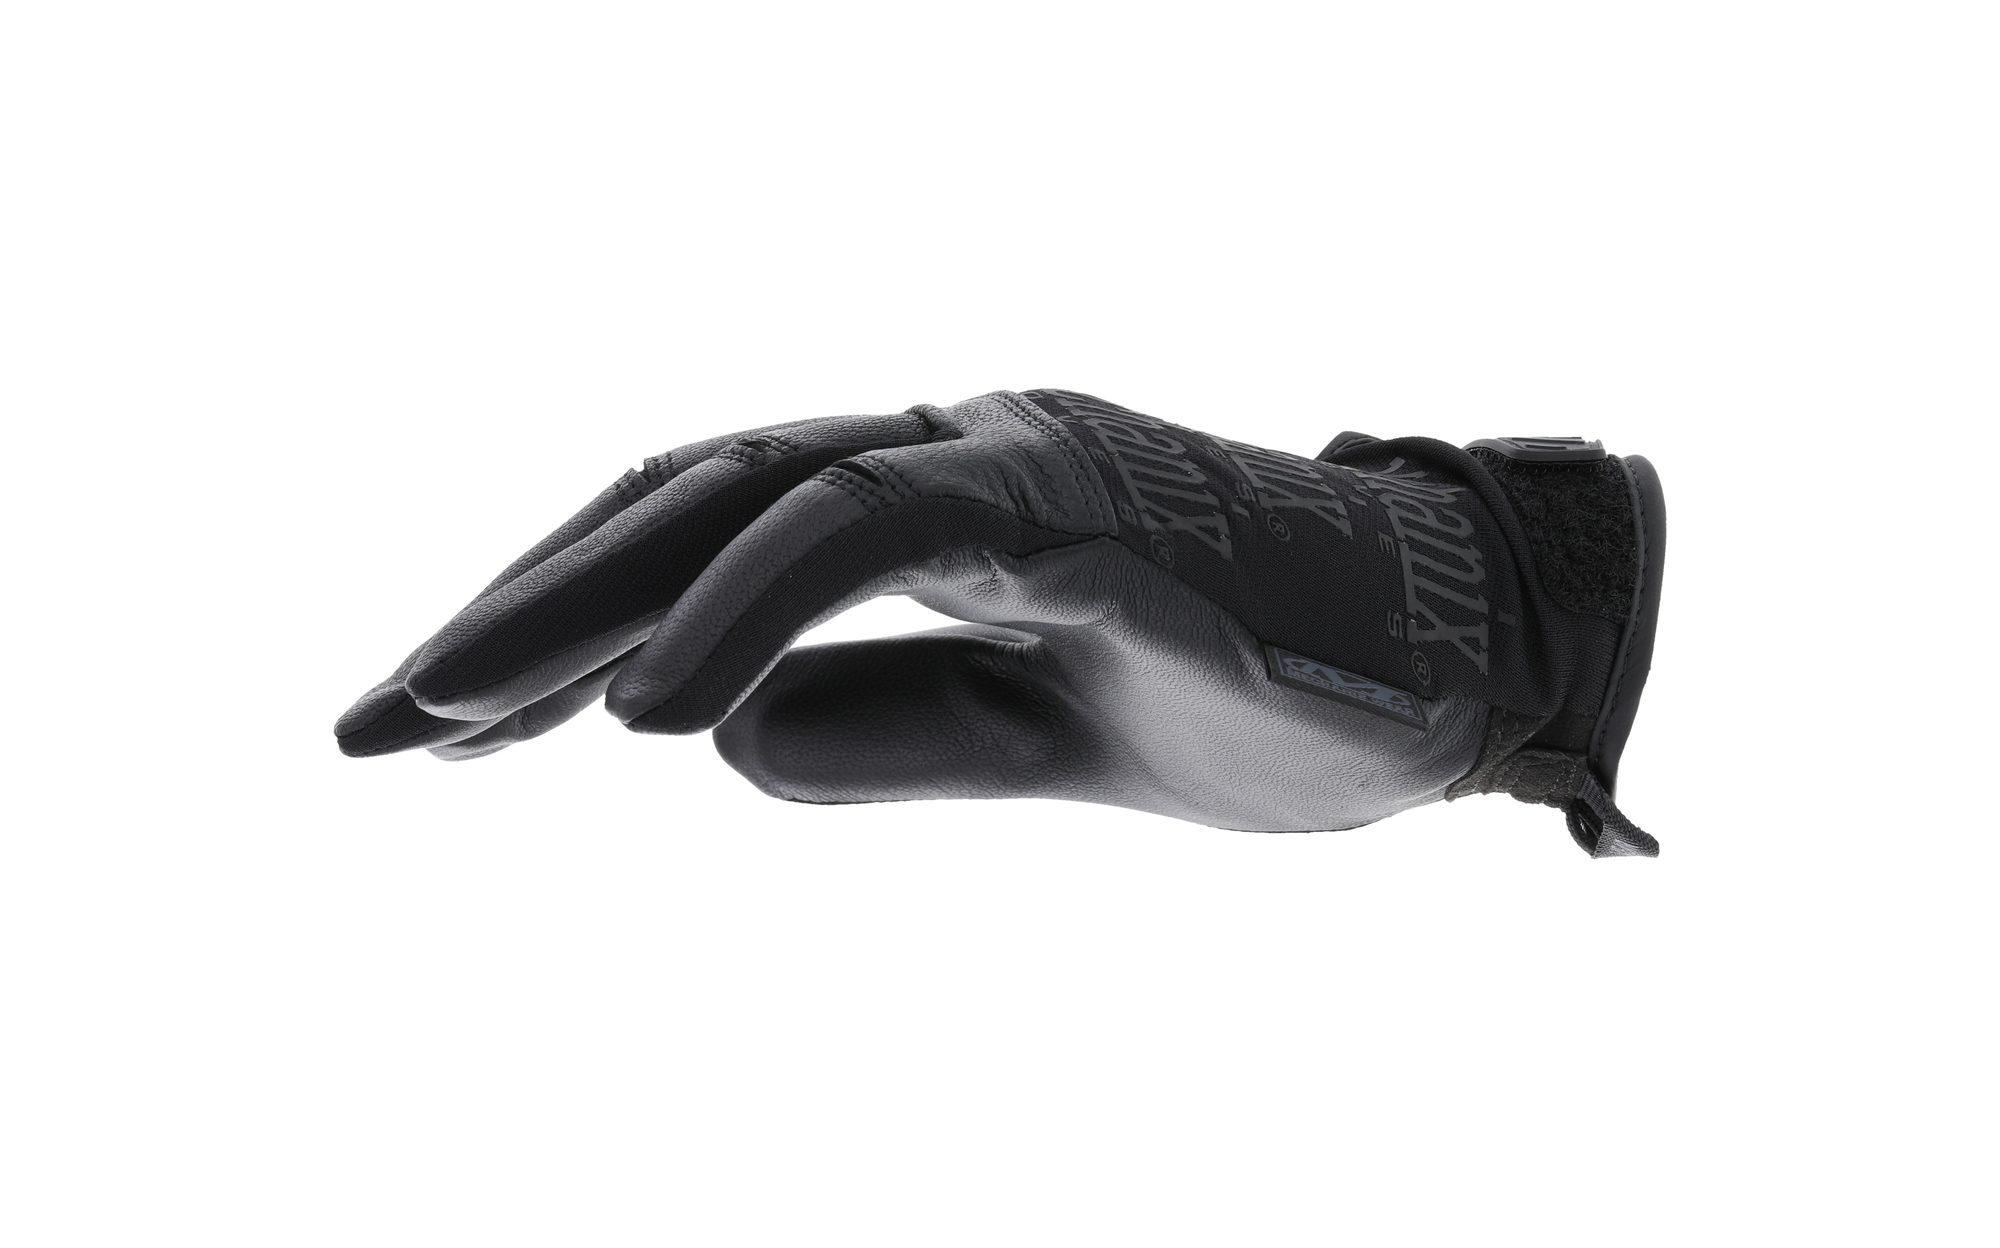 MECHANIX rukavice Recon - Covert - čierne XL/11